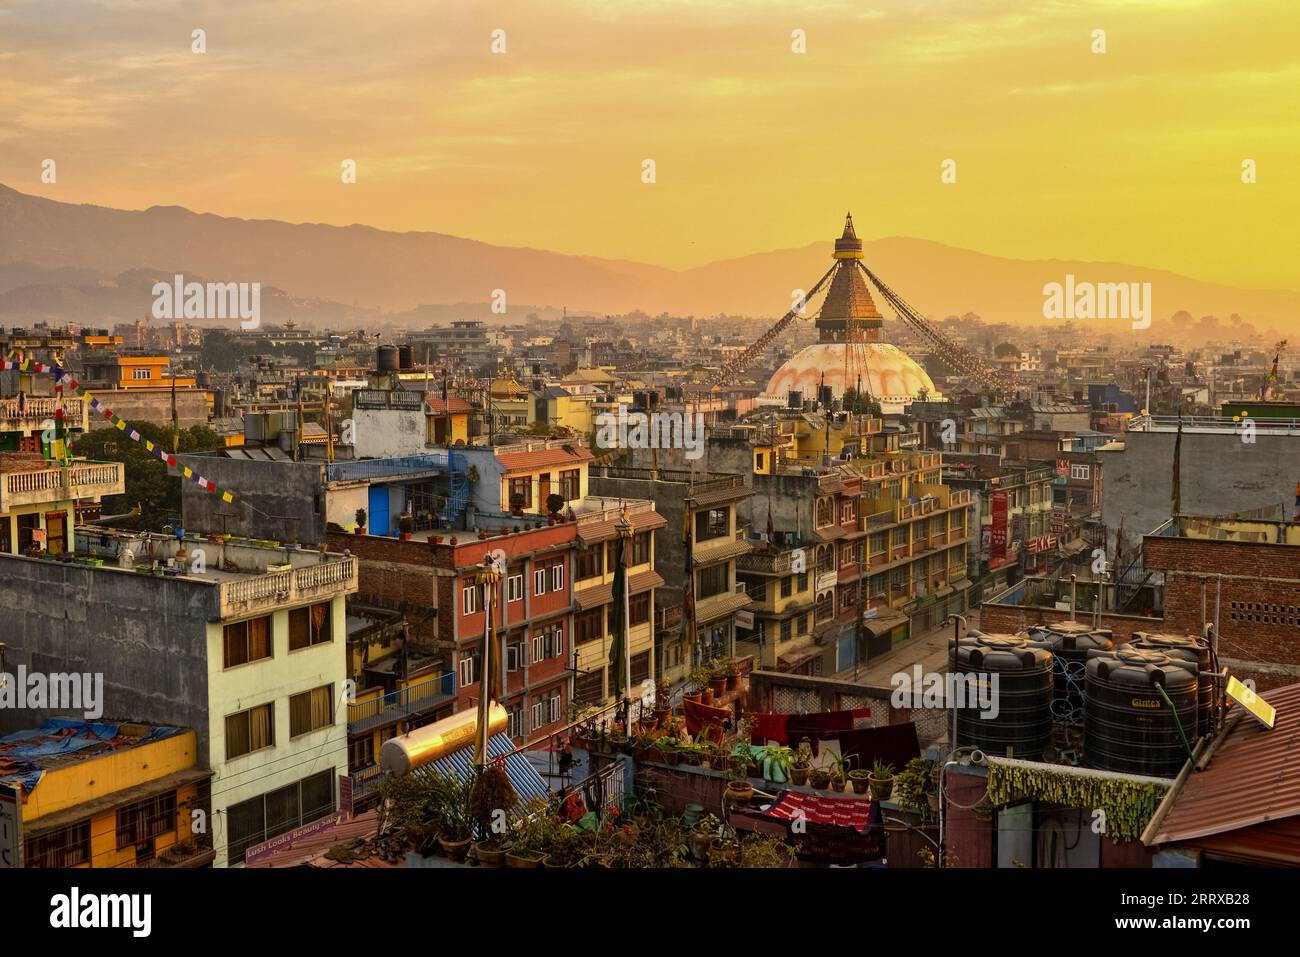 Bouddha, the Great stupa in Kathmandu and buildings around in Kathmandu, Nepal, in a smoggy orange sunset hue Stock Photo